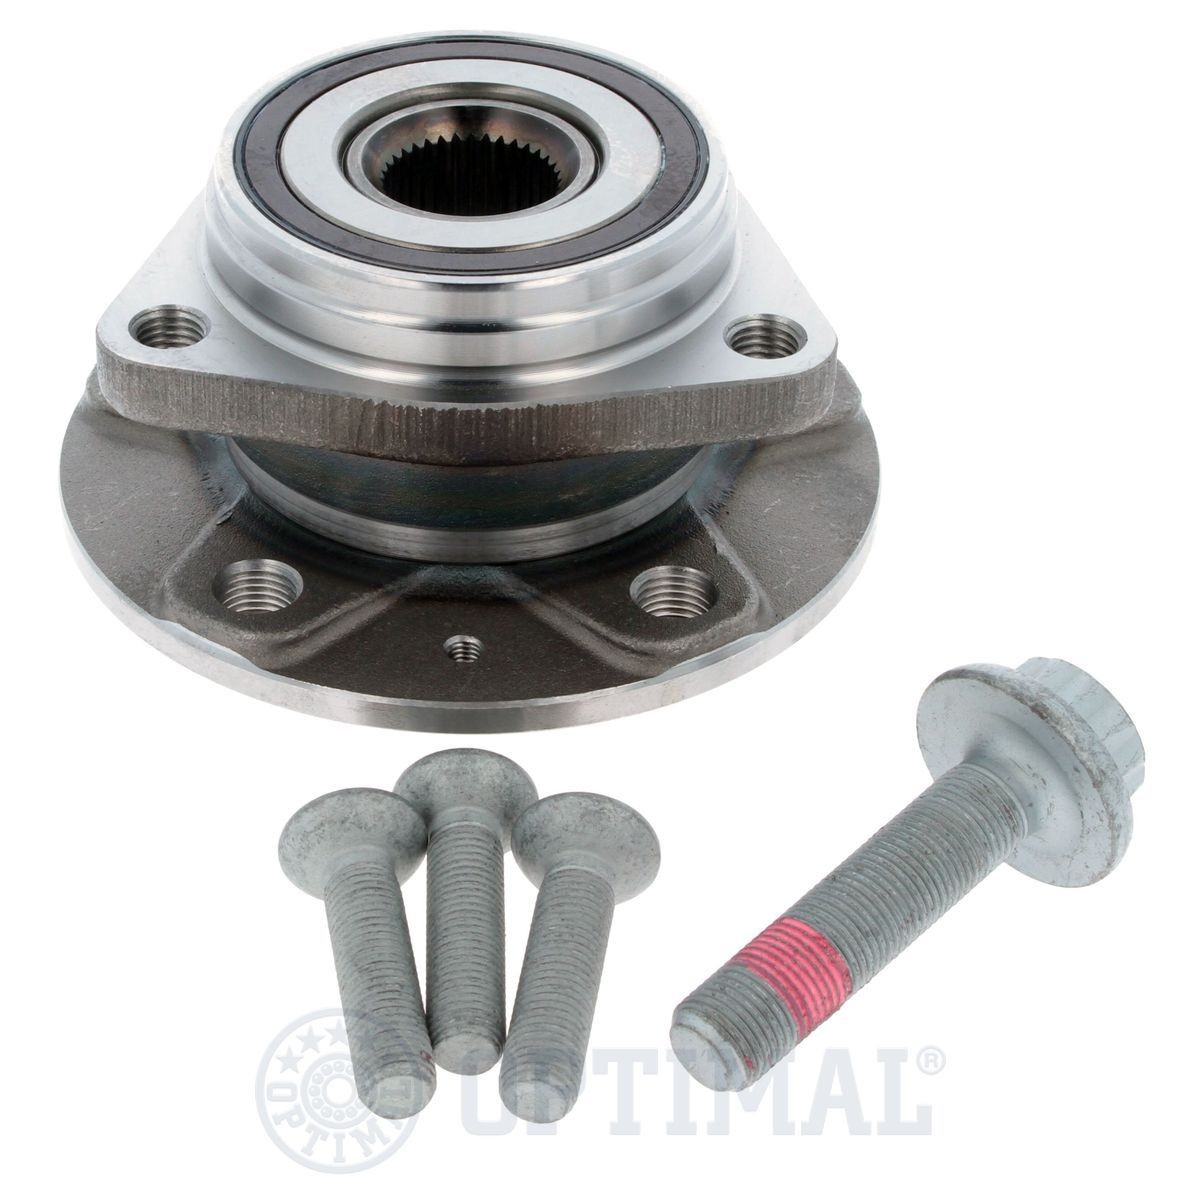 OPTIMAL 101203 Wheel bearing kit with integrated magnetic sensor ring, 137, 85 mm